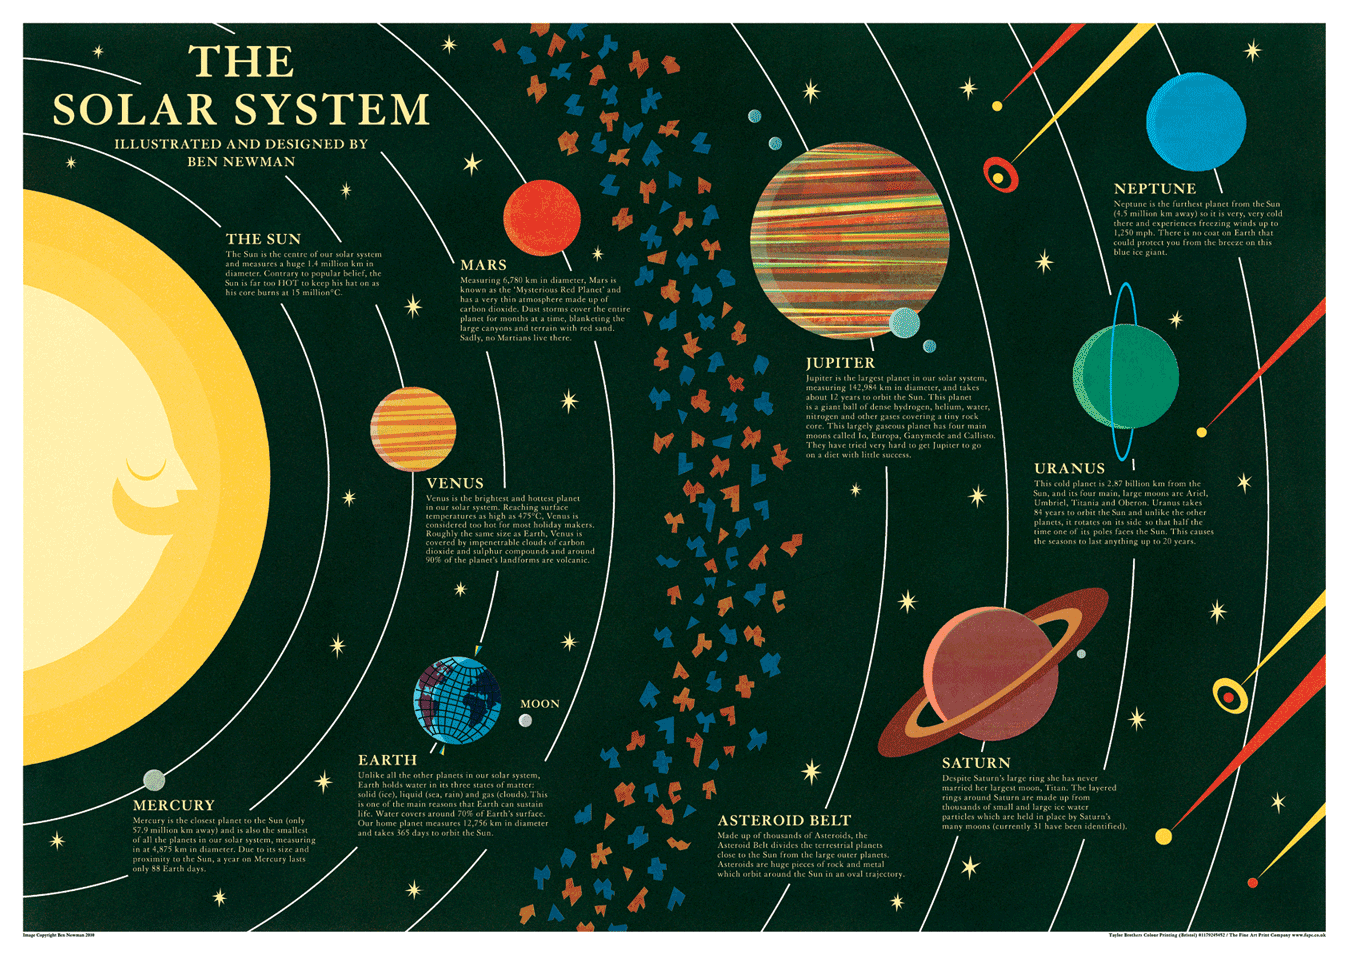 Blogoliolio: The Solar System